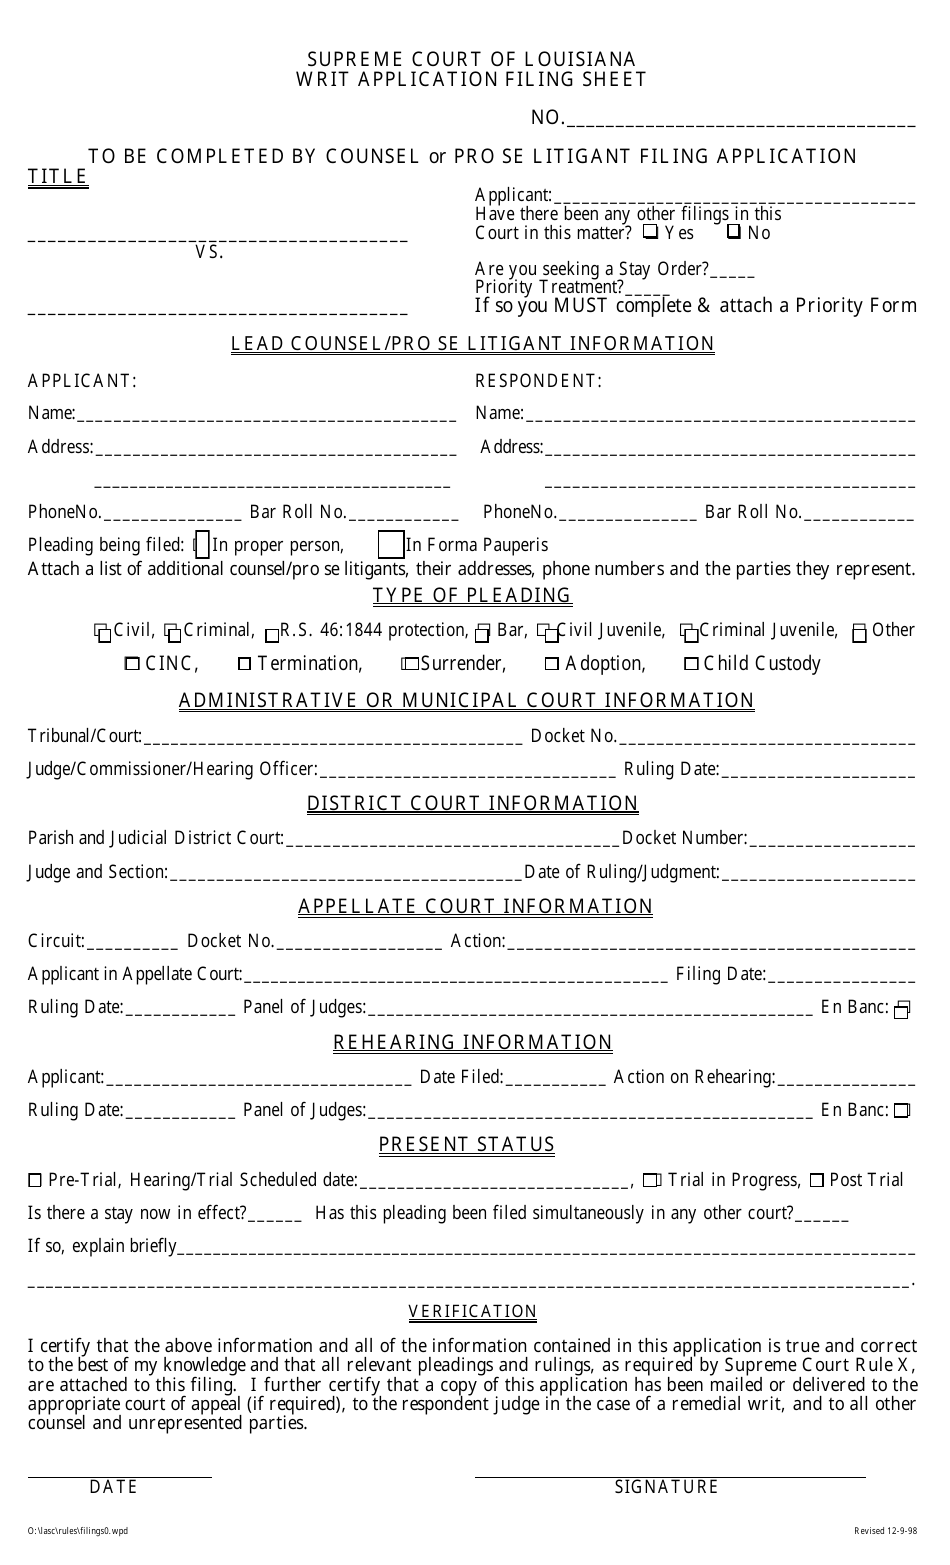 Appendix C Writ Application Filing Sheet - Louisiana, Page 1